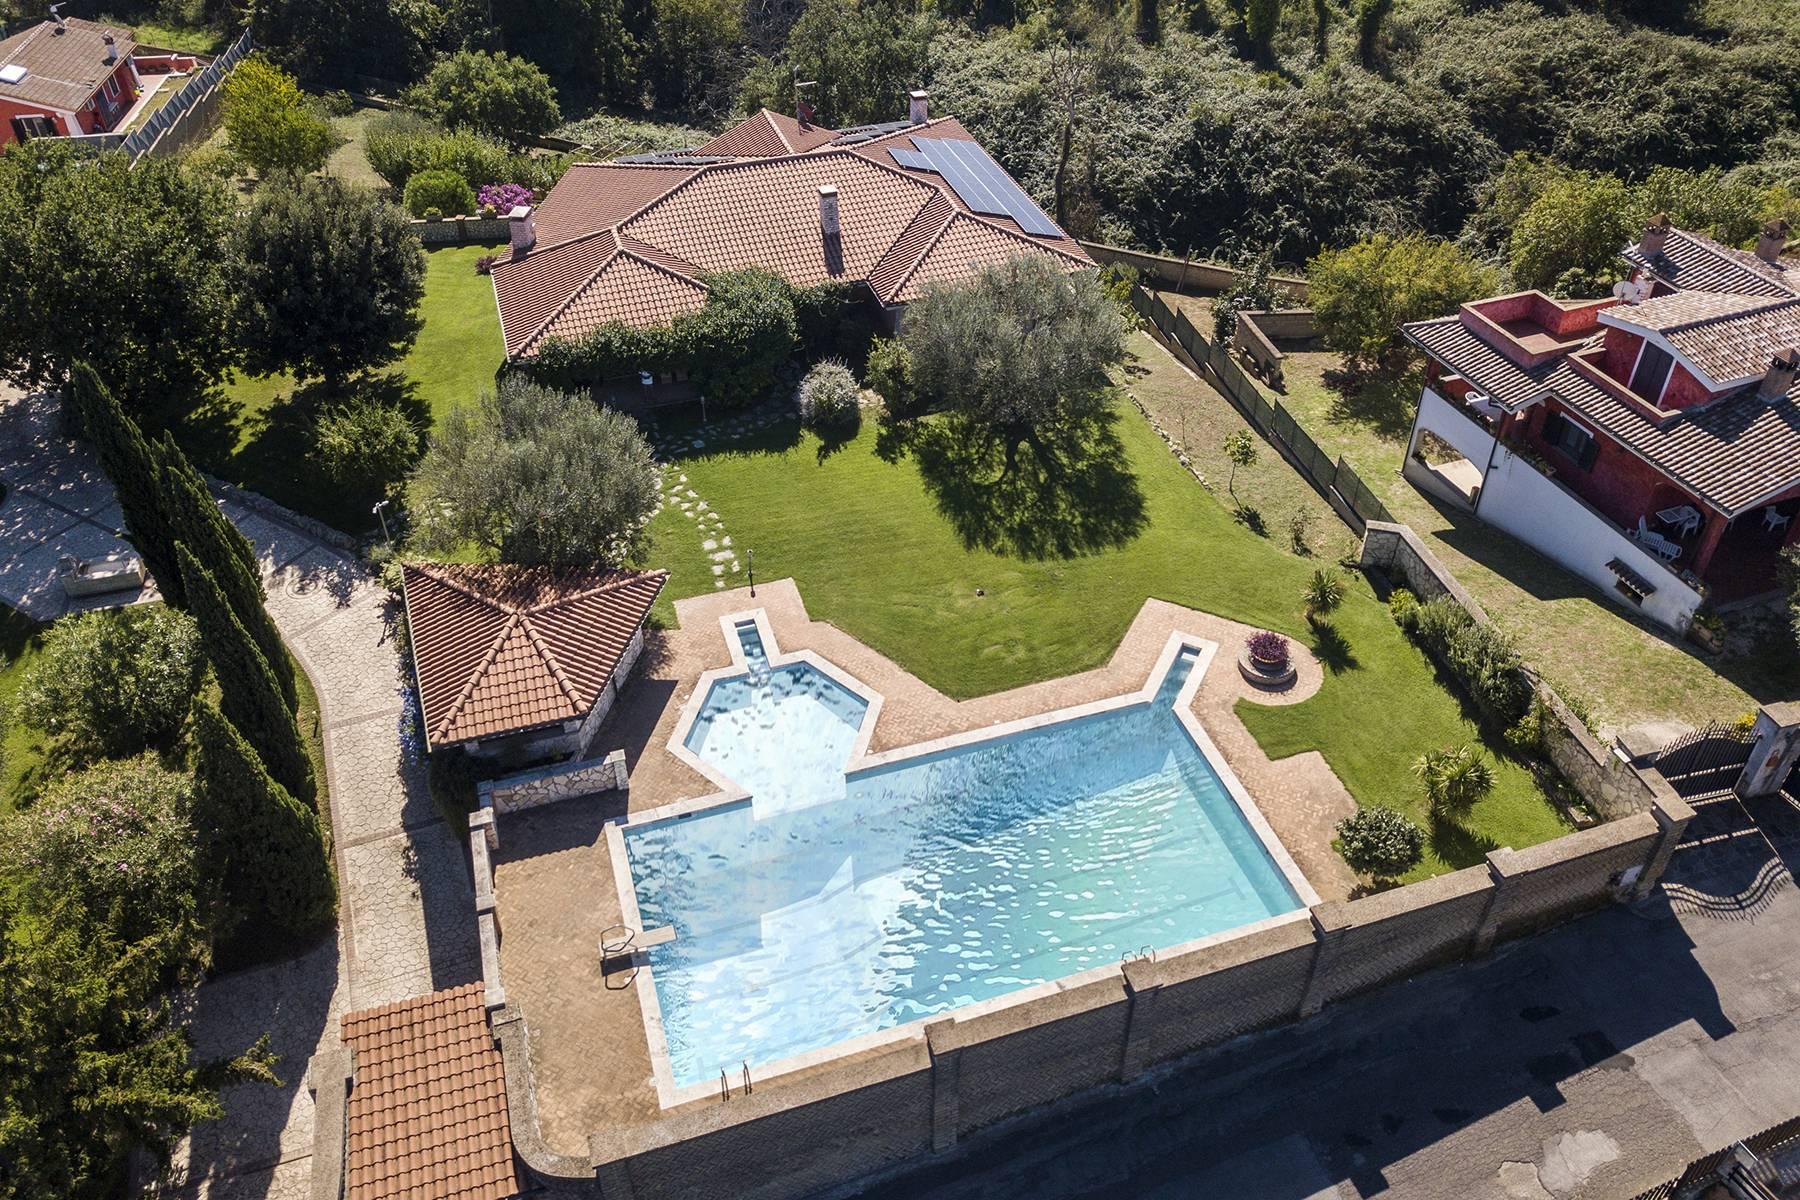 Moderna villa con piscina a due passi da Roma - 39